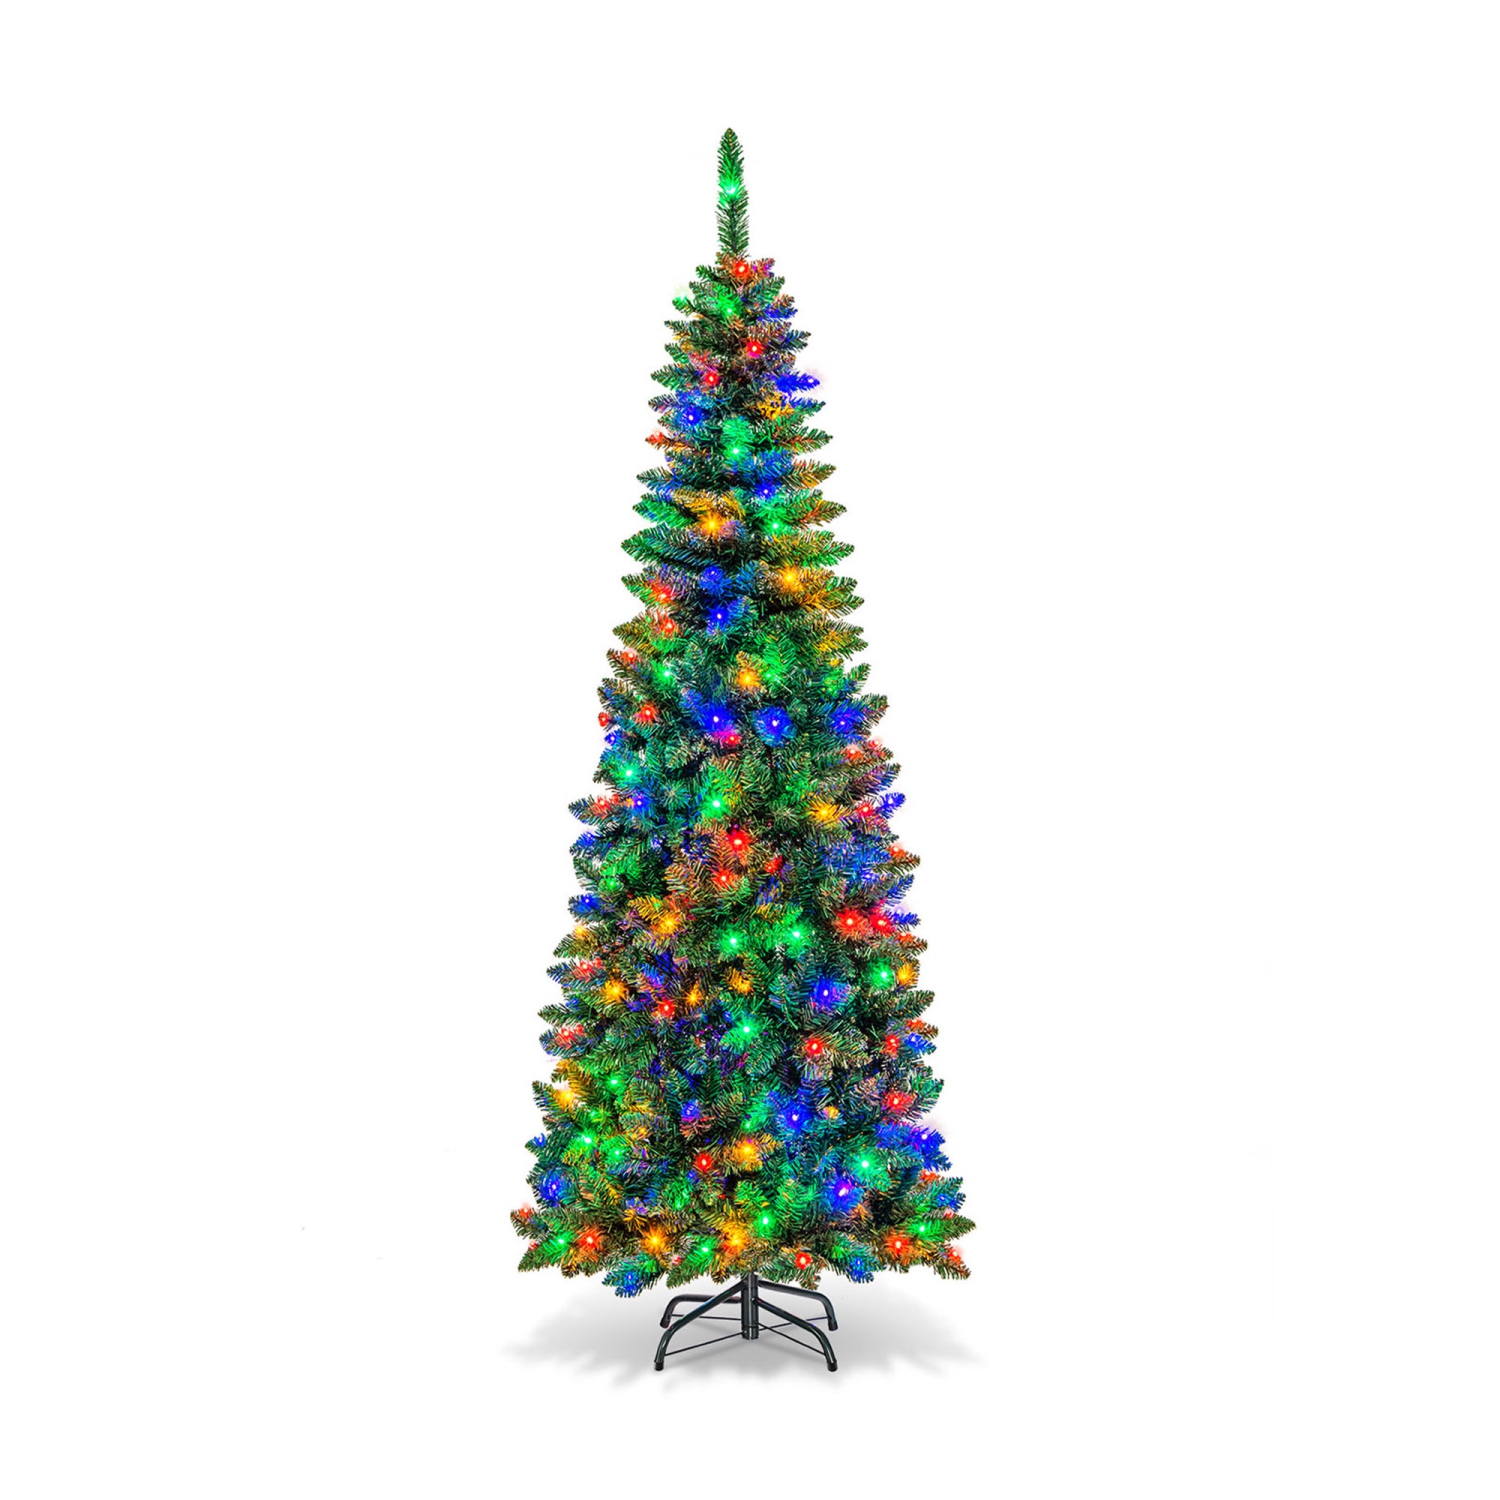 Gymax 7.5ft Pre-Lit Pencil Christmas Tree Hinged PVC Tree w/ 350 Colorful LED Lights